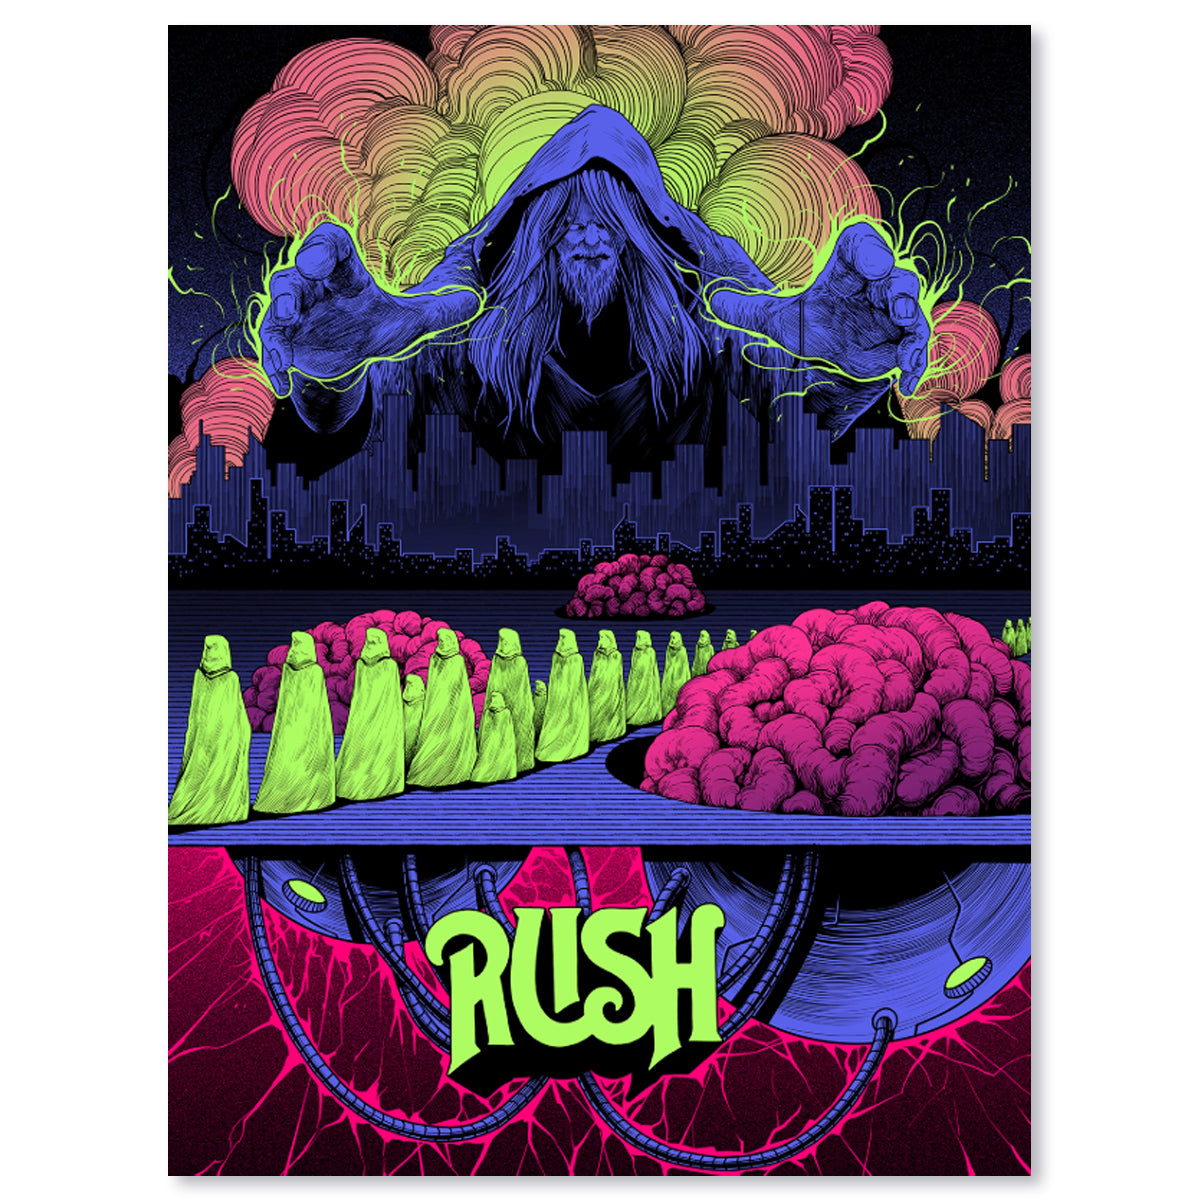 Rush - 2112: I. 'Overture' (Main Edition)